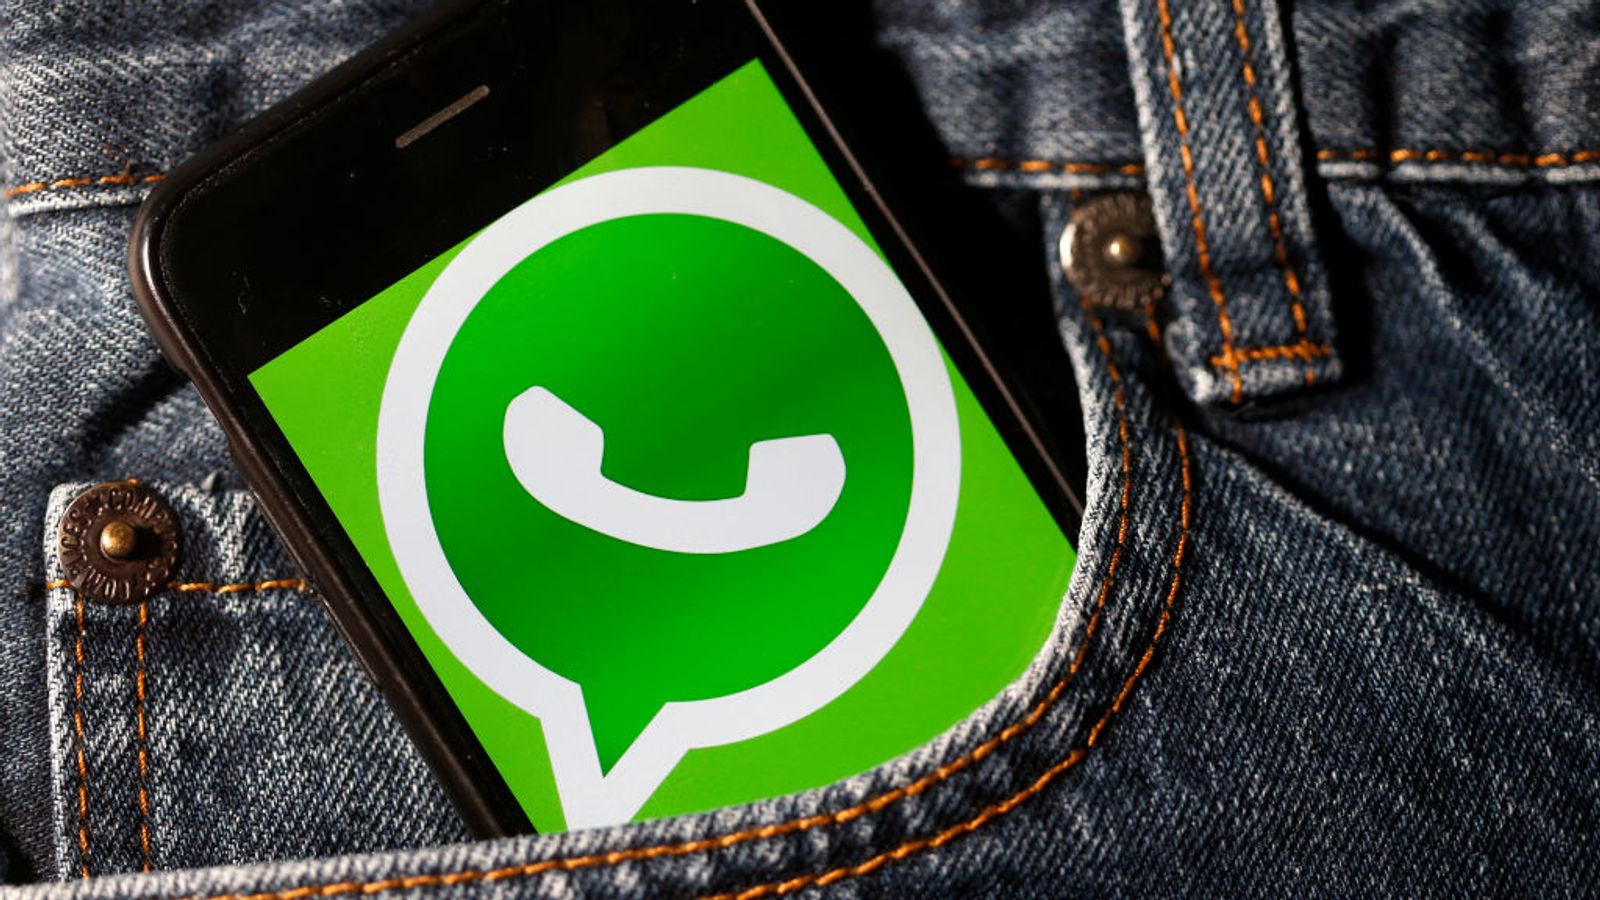 WhatsApp hack: Tech giants unite against spyware company NSO Group